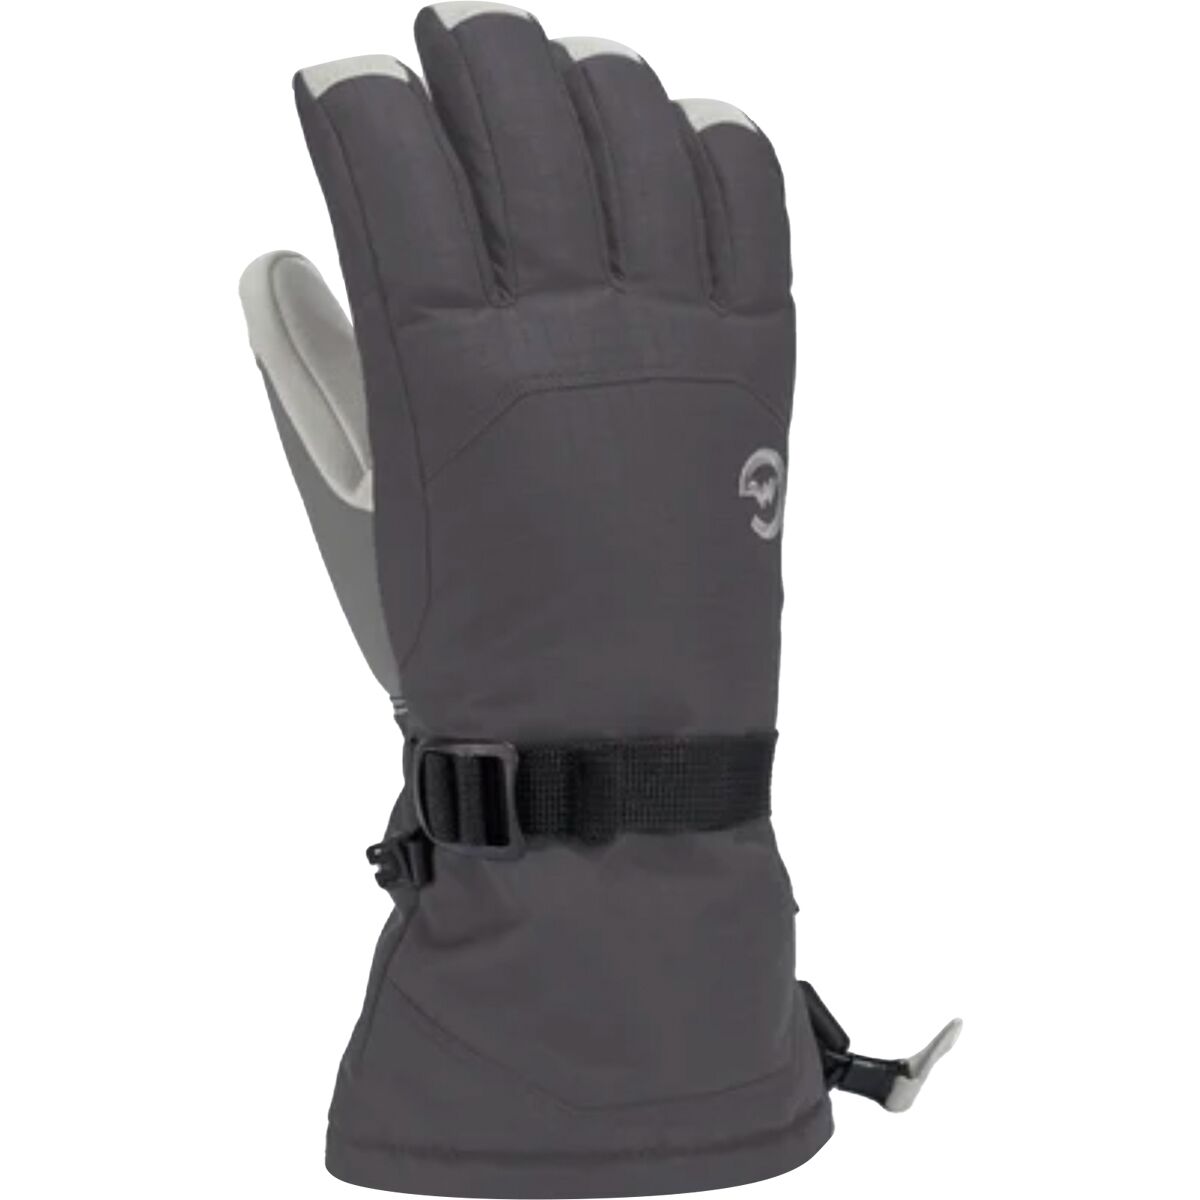 Gordini Foundation Glove - Men's